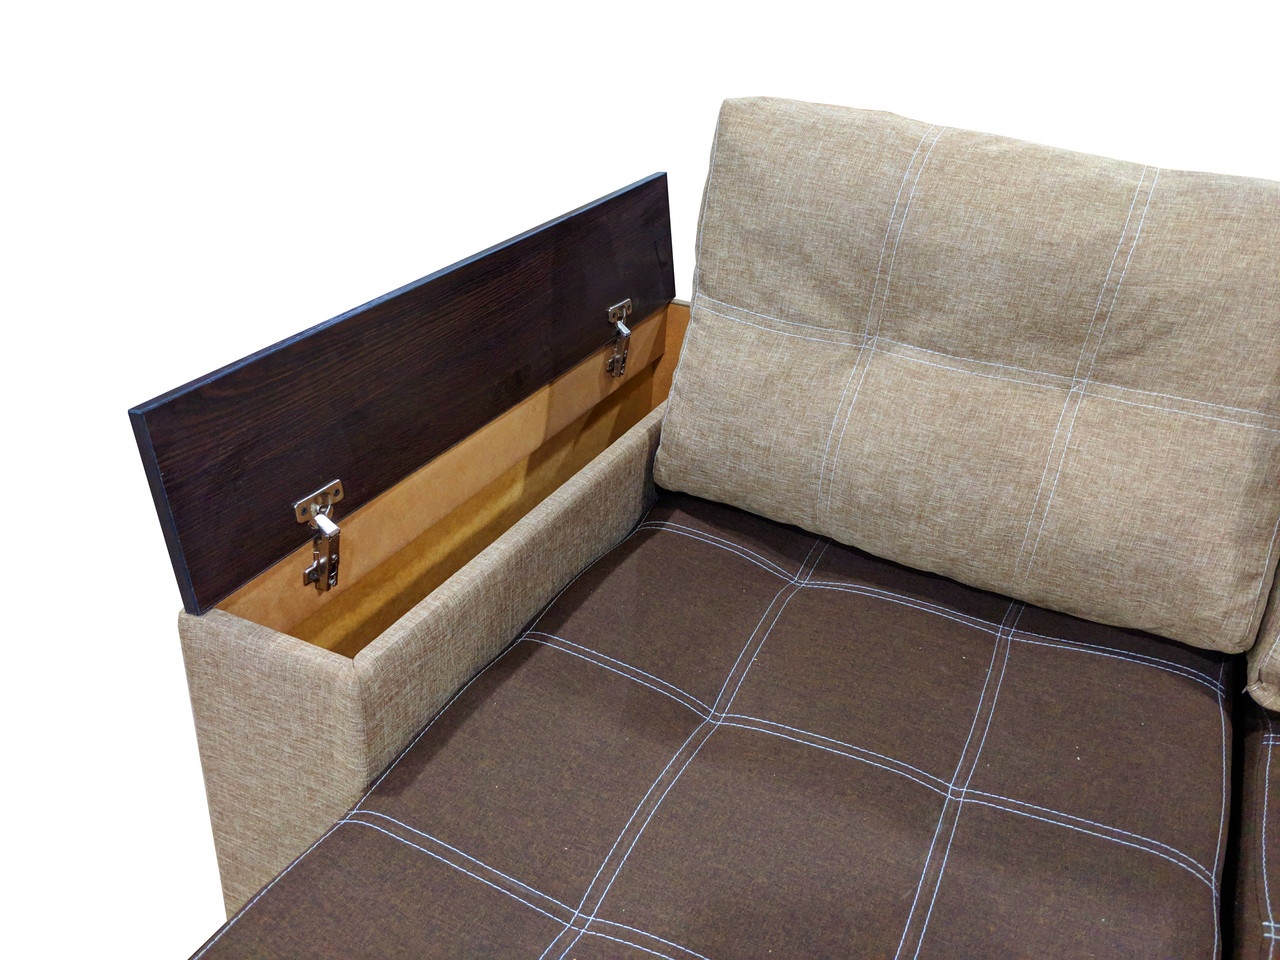 Угловой диван Комфорт Плюс 3м (коричневый с бежевым, 300х150 см) IMI kkmfp-sn-3-21 фото